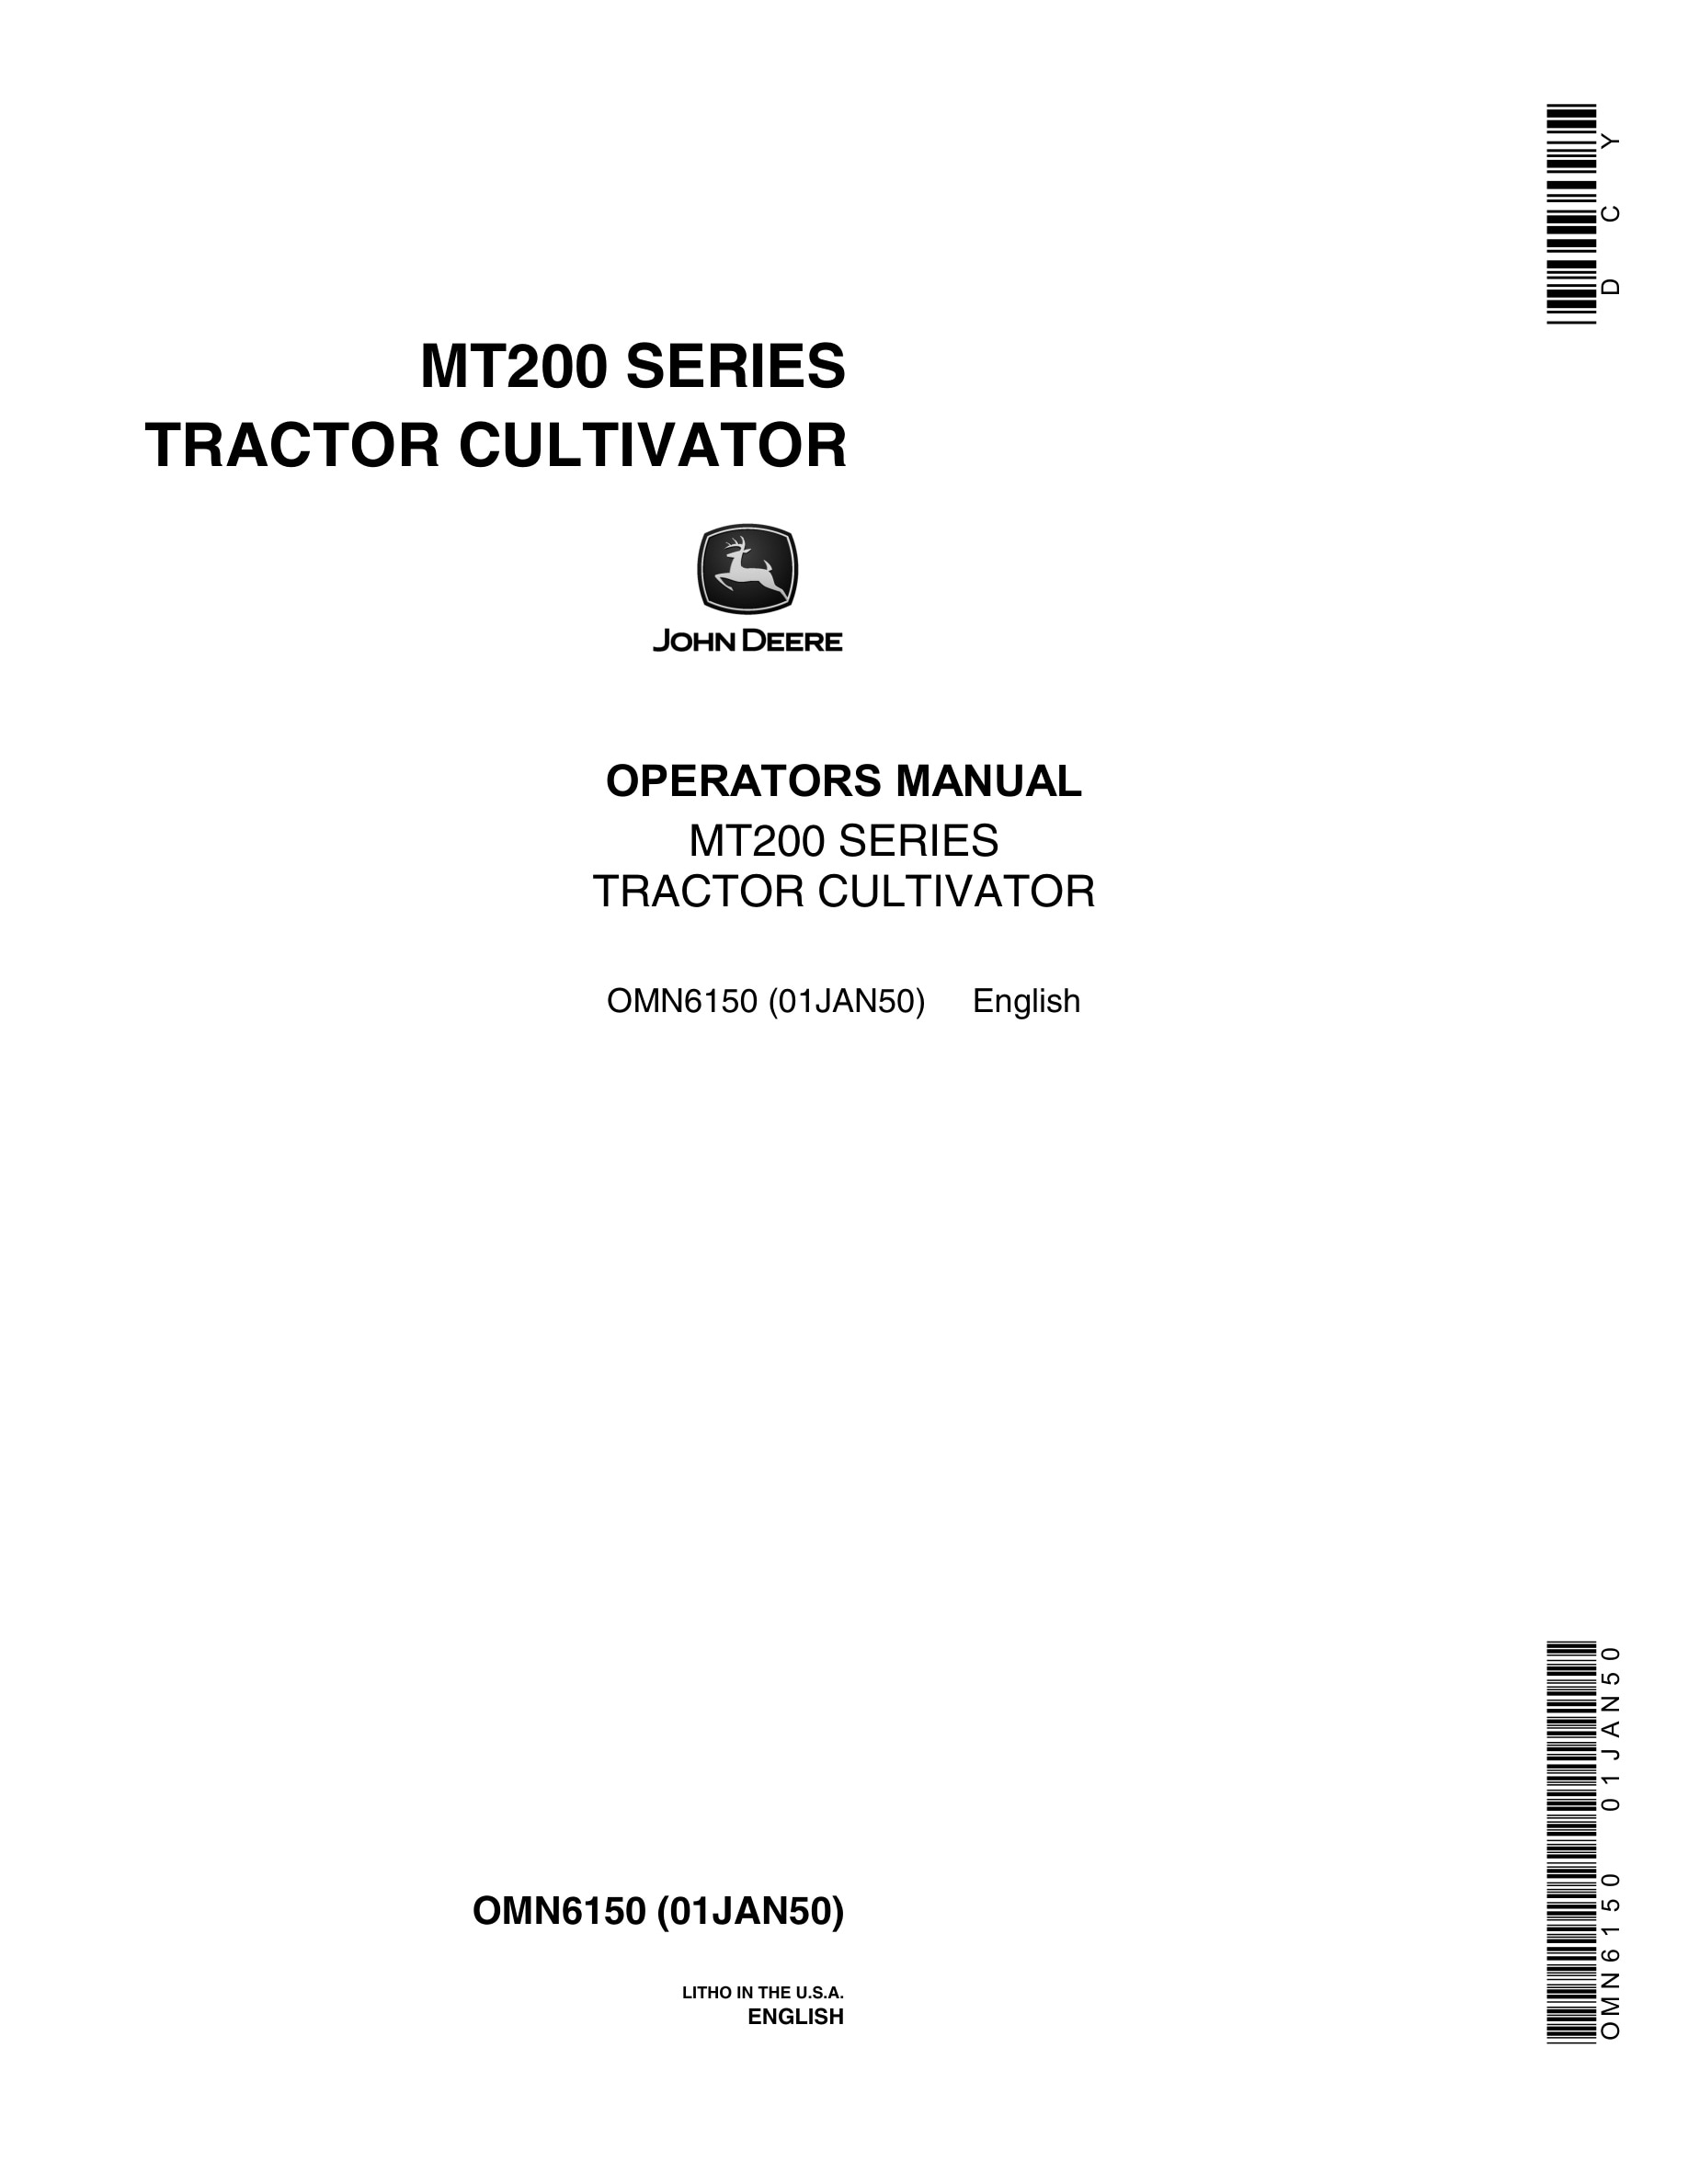 John Deere MT200 SERIES TRACTOR CULTIVATOR Operator Manual OMN6150-1